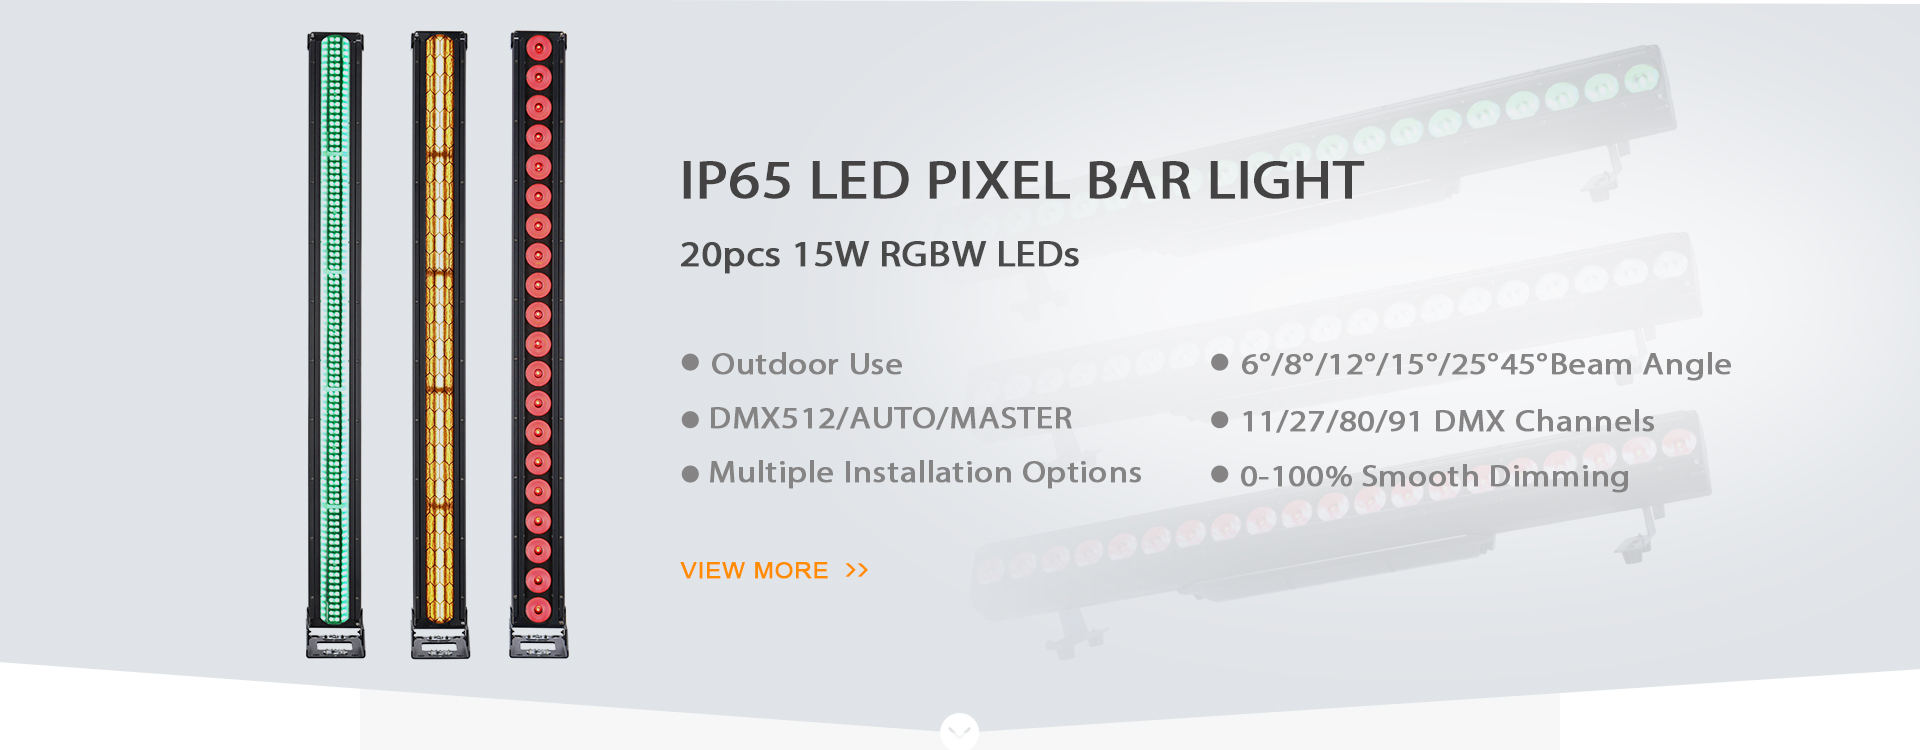 LED PIXEL BAR LIGHT IP65 OUTDOOR USE